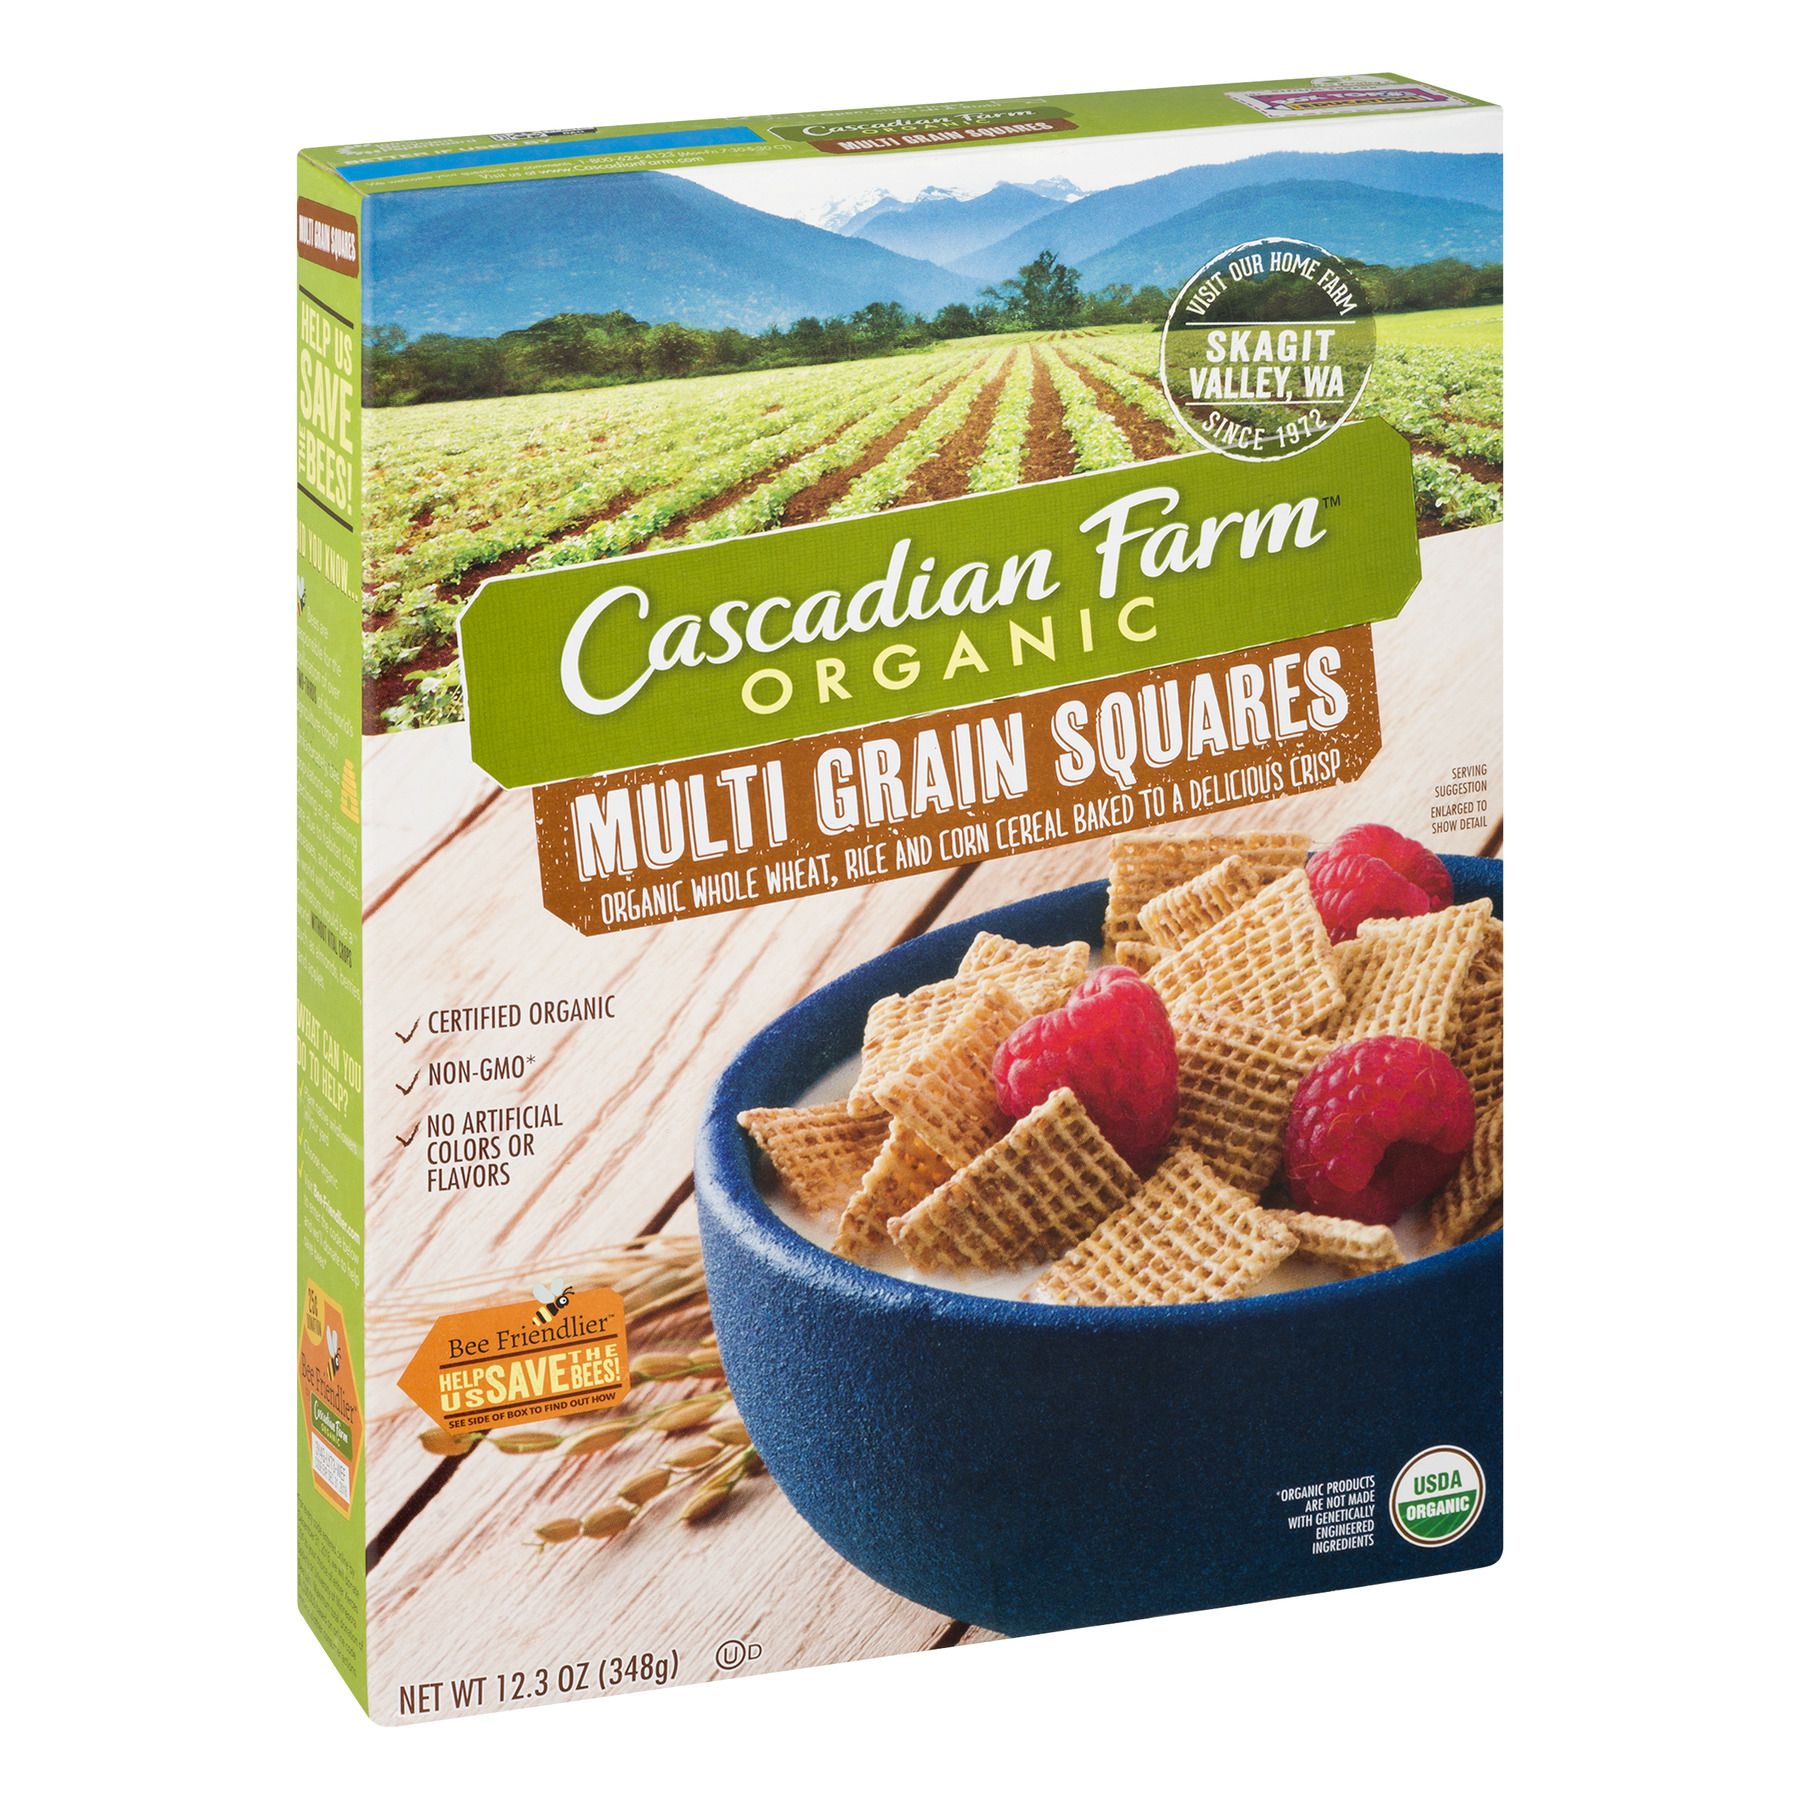 Cascadian Farm Organic Multi-Grain Squares